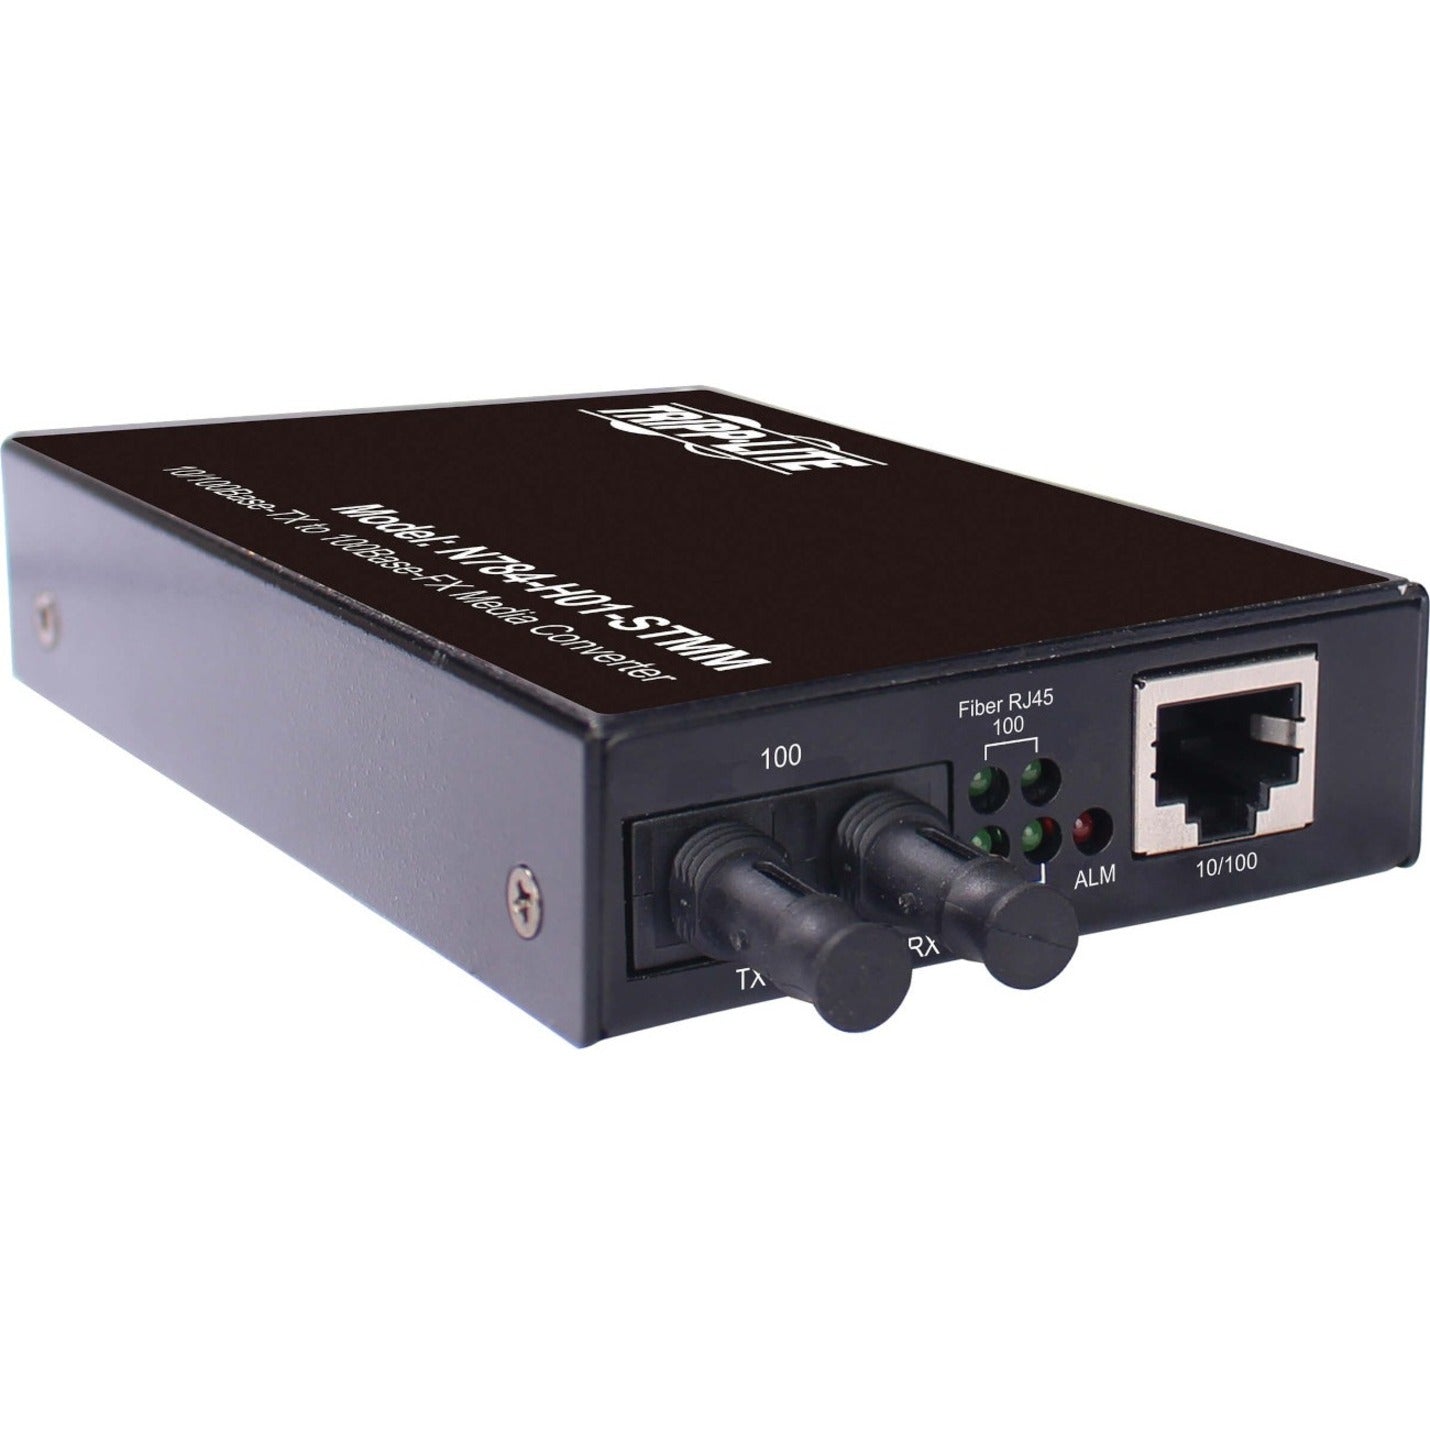 Tripp Lite N784-H01-STMM Transceptor/Convertidor de medios 10/100Base-TX 100Base-FX Ethernet Rápida Multi-modo 1.24 Millas